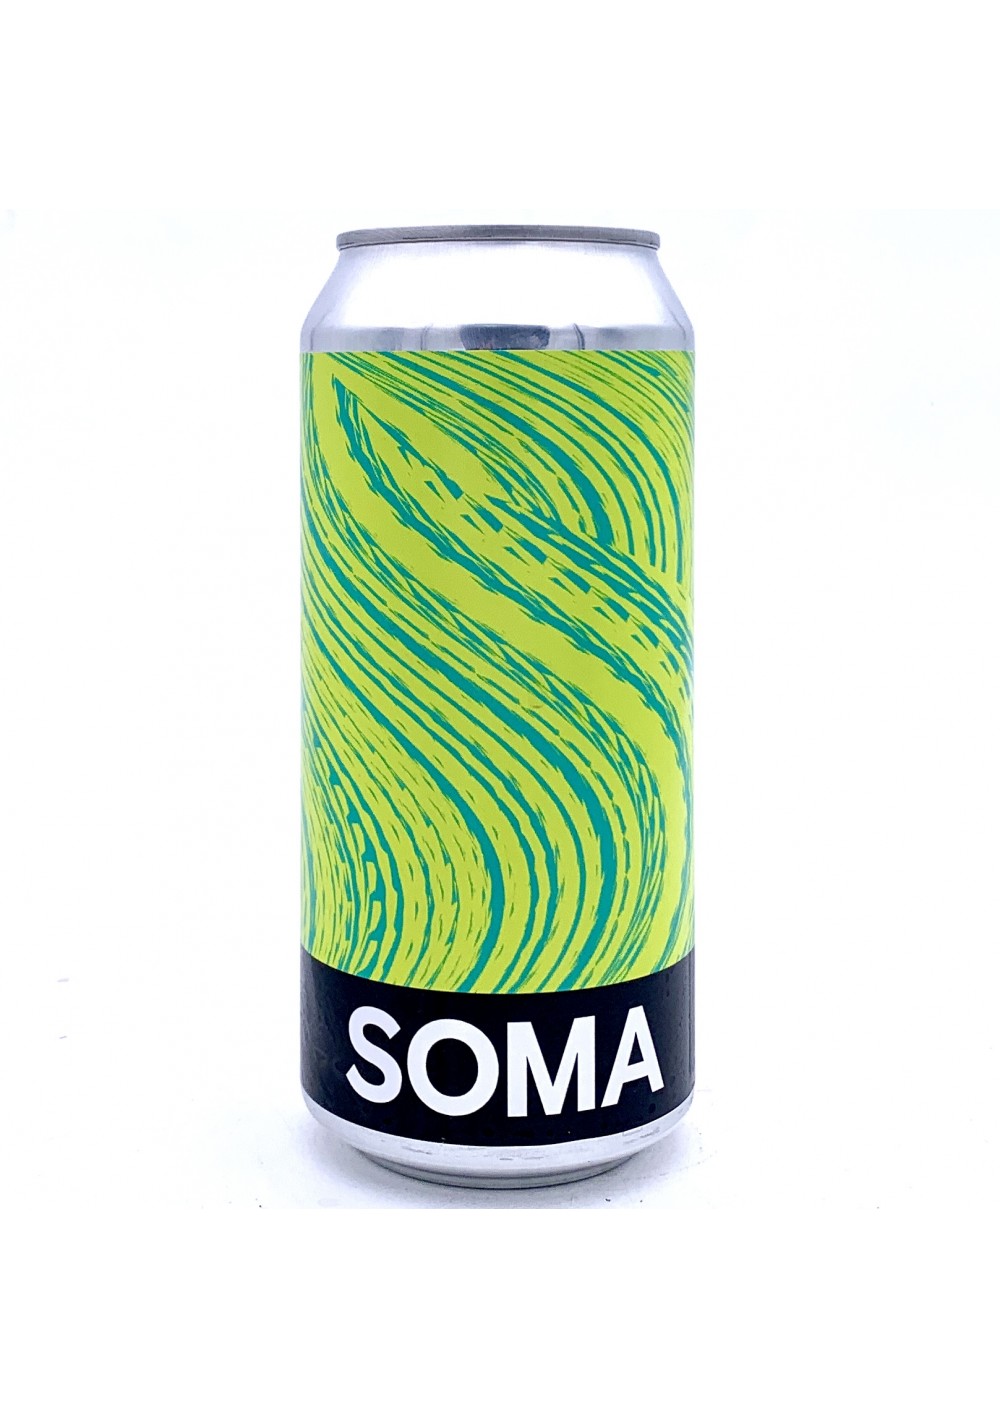 SOMA - Green Light - New England IPA